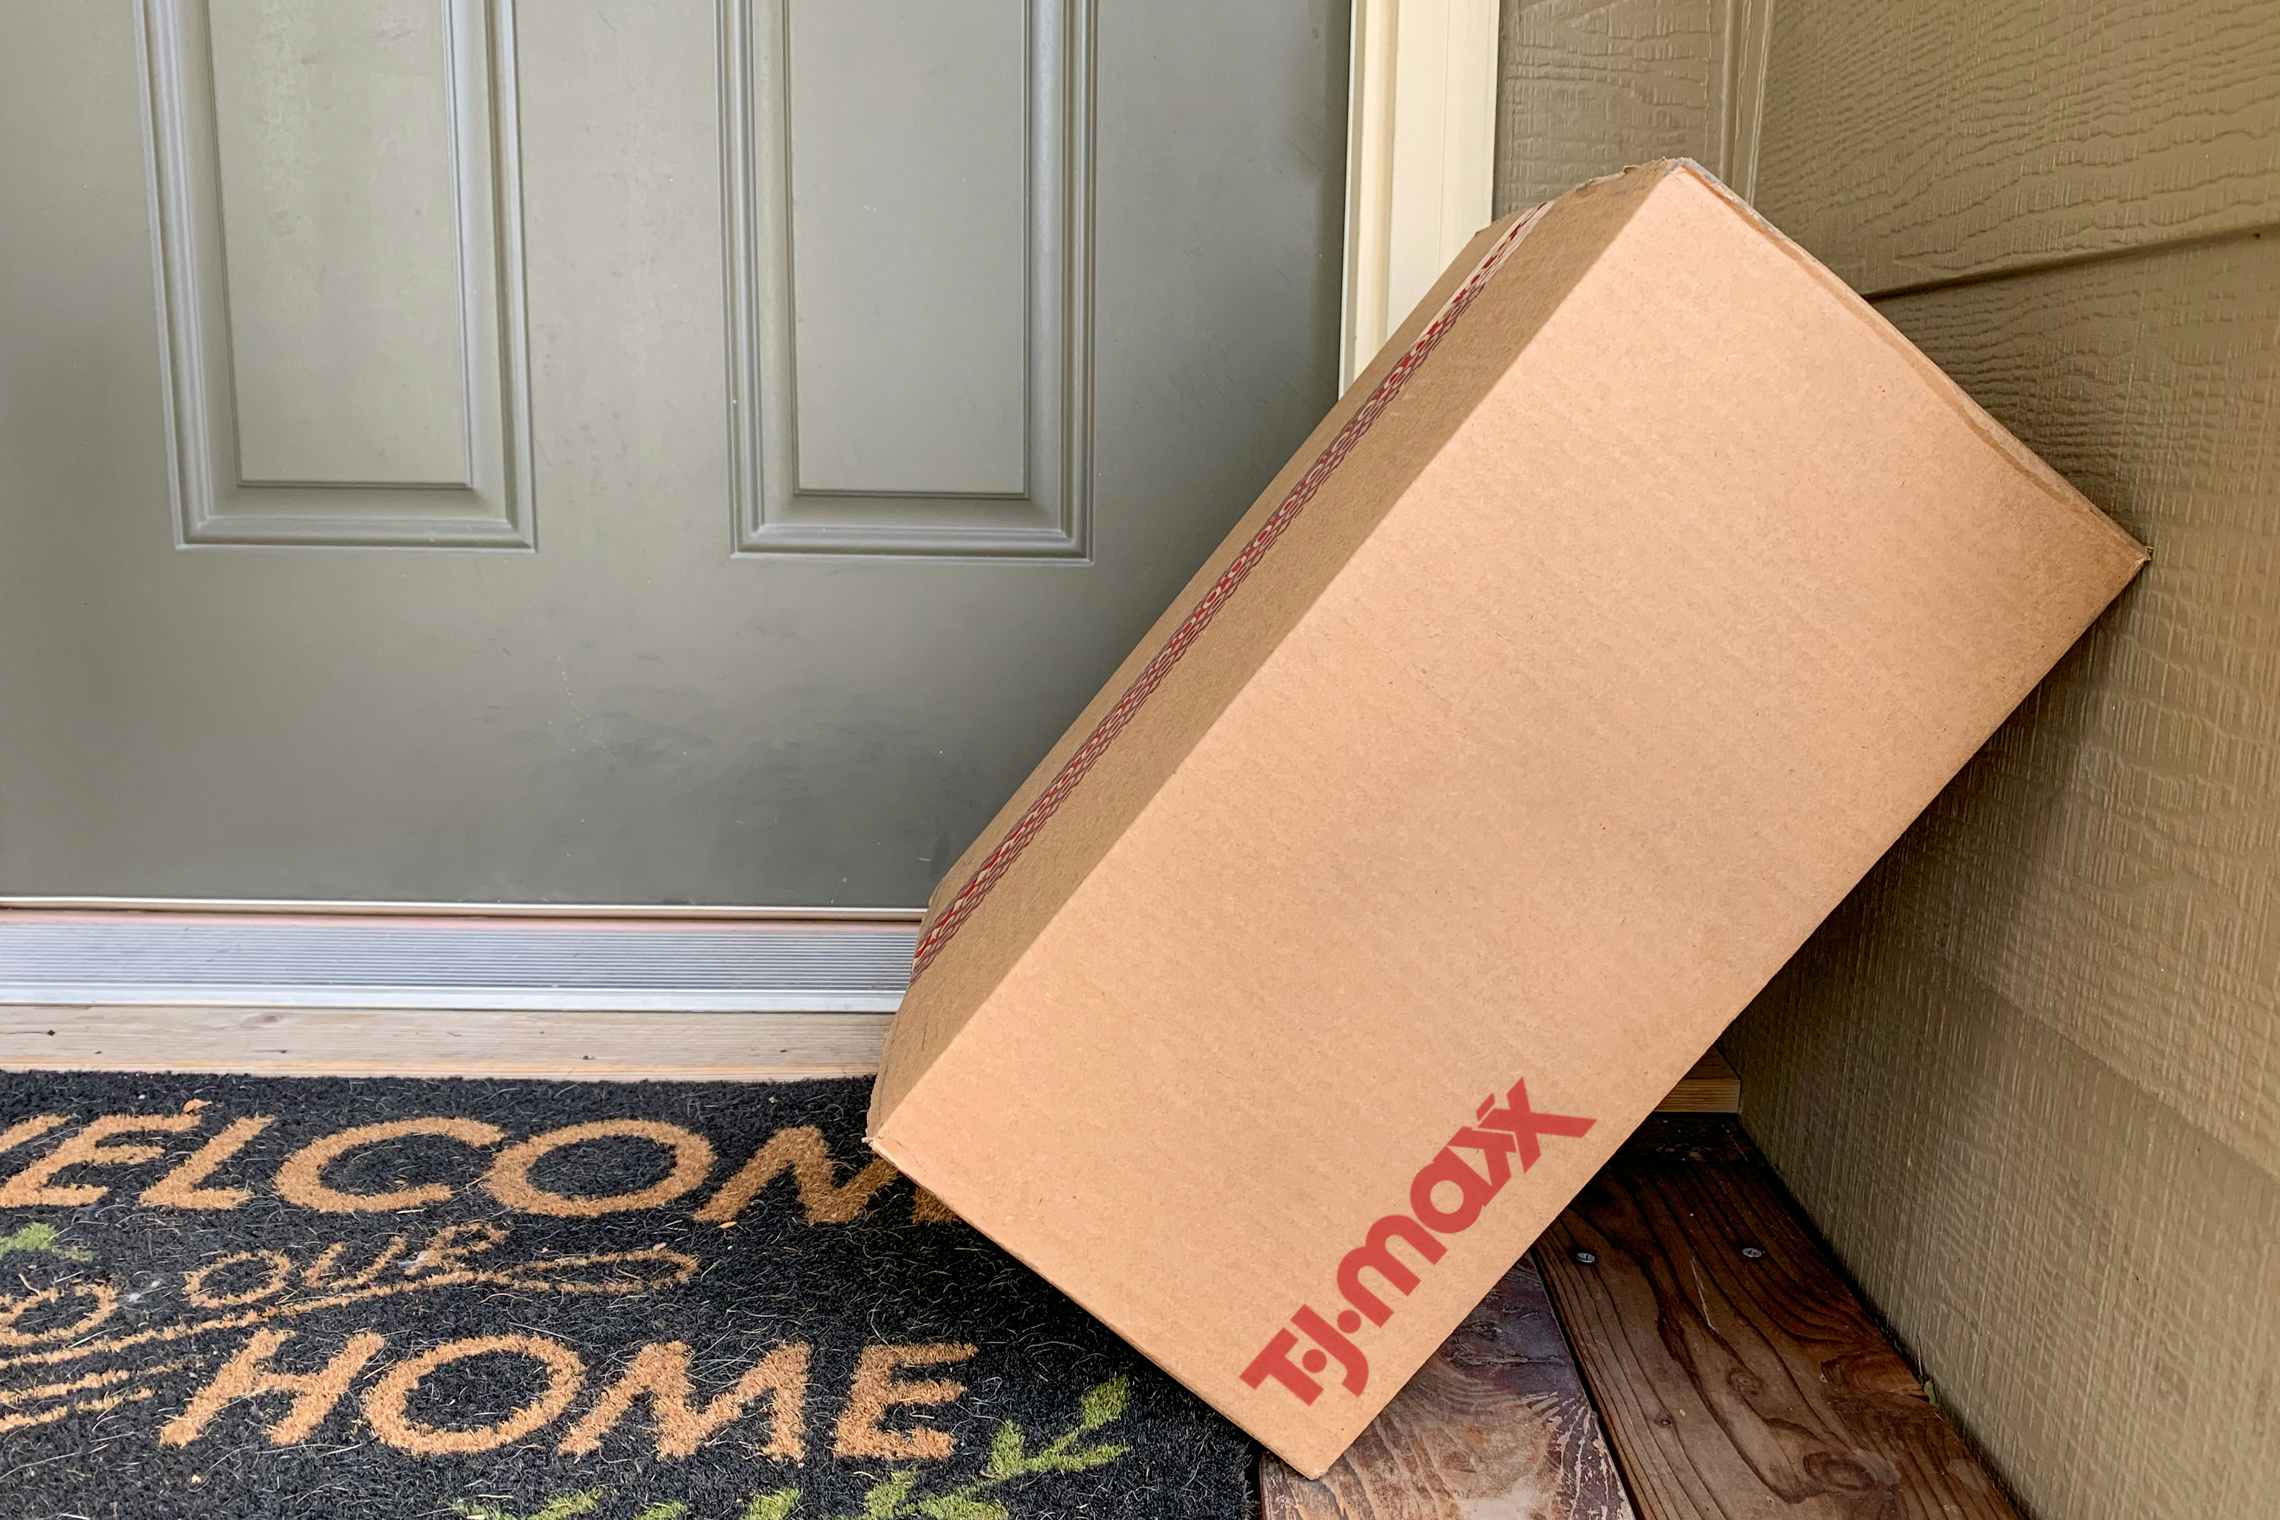 TJ Maxx delivery box on doorstep